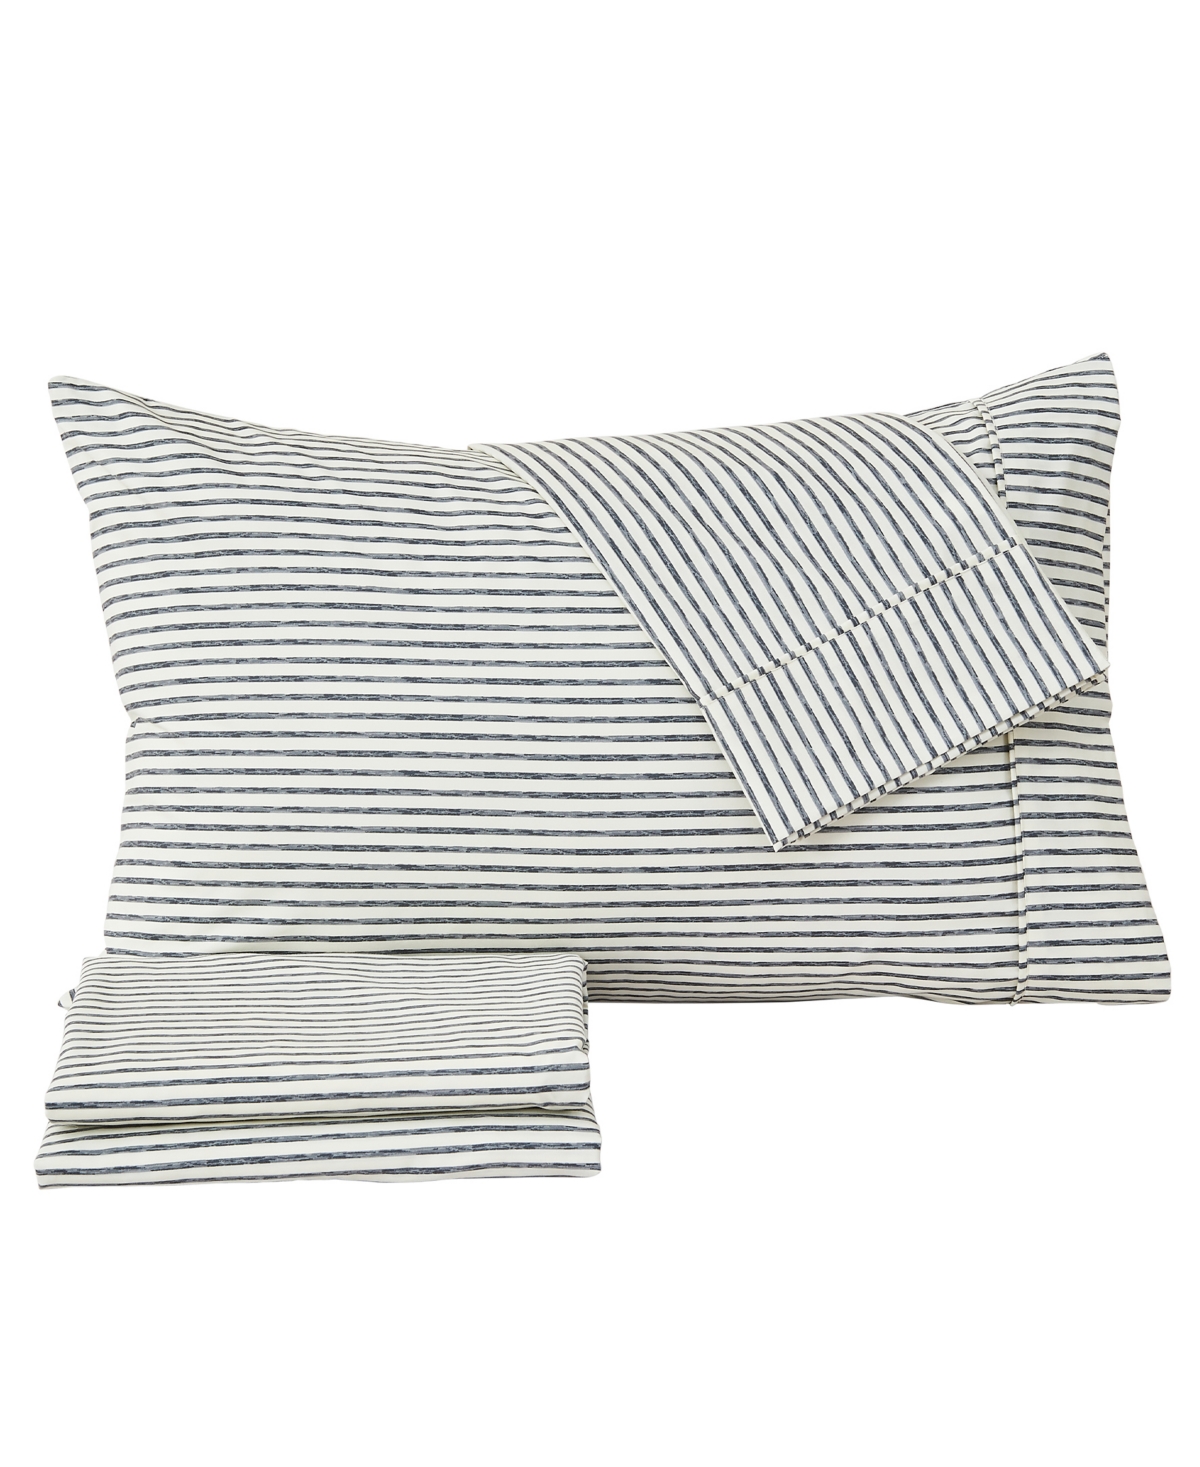 Premium Comforts Striped Microfiber Crease Resistant 3 Piece Sheet Set, Twin In Stripe - Dark Gray